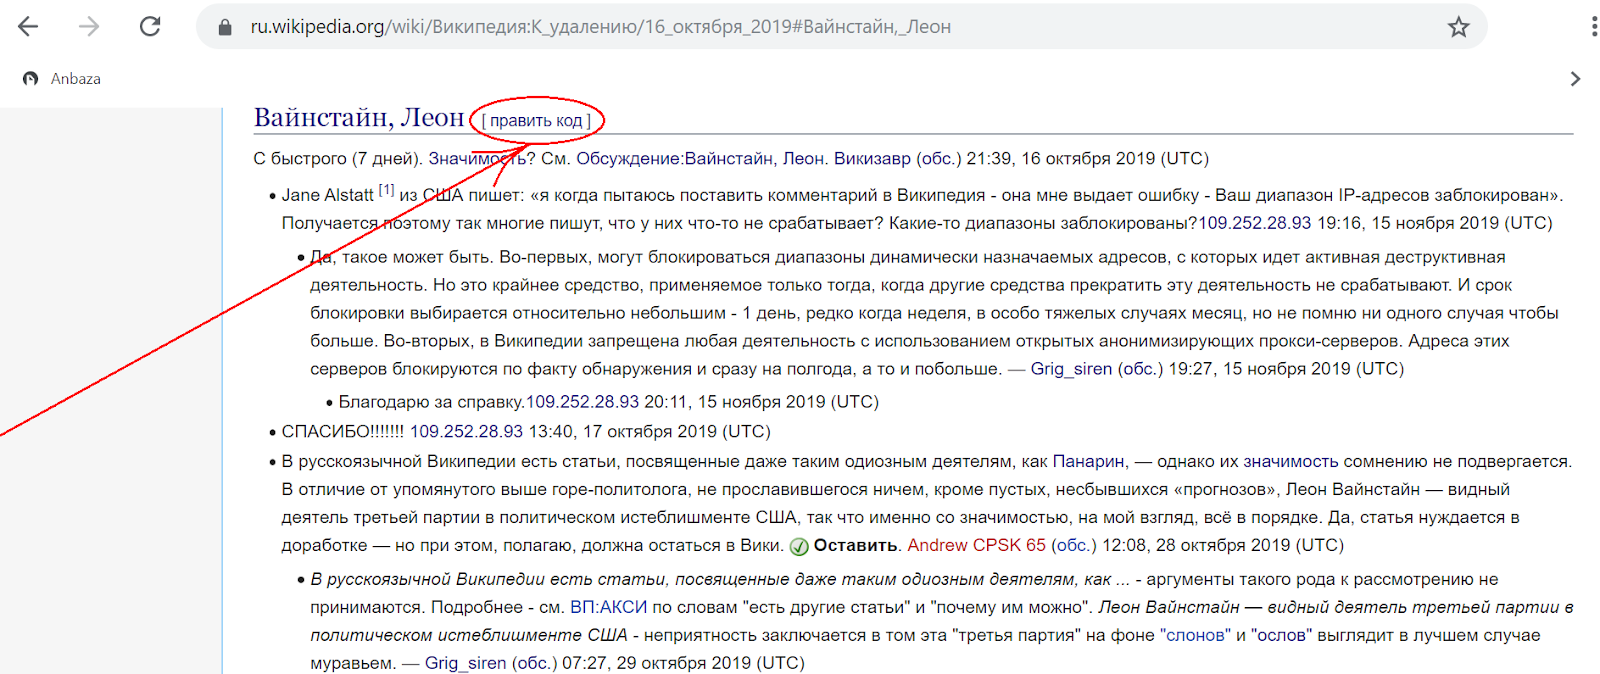 Https ru wiktionary org wiki. Википедия цвета ссылок. Скриншоты изменений в Википедии. Wiki org.